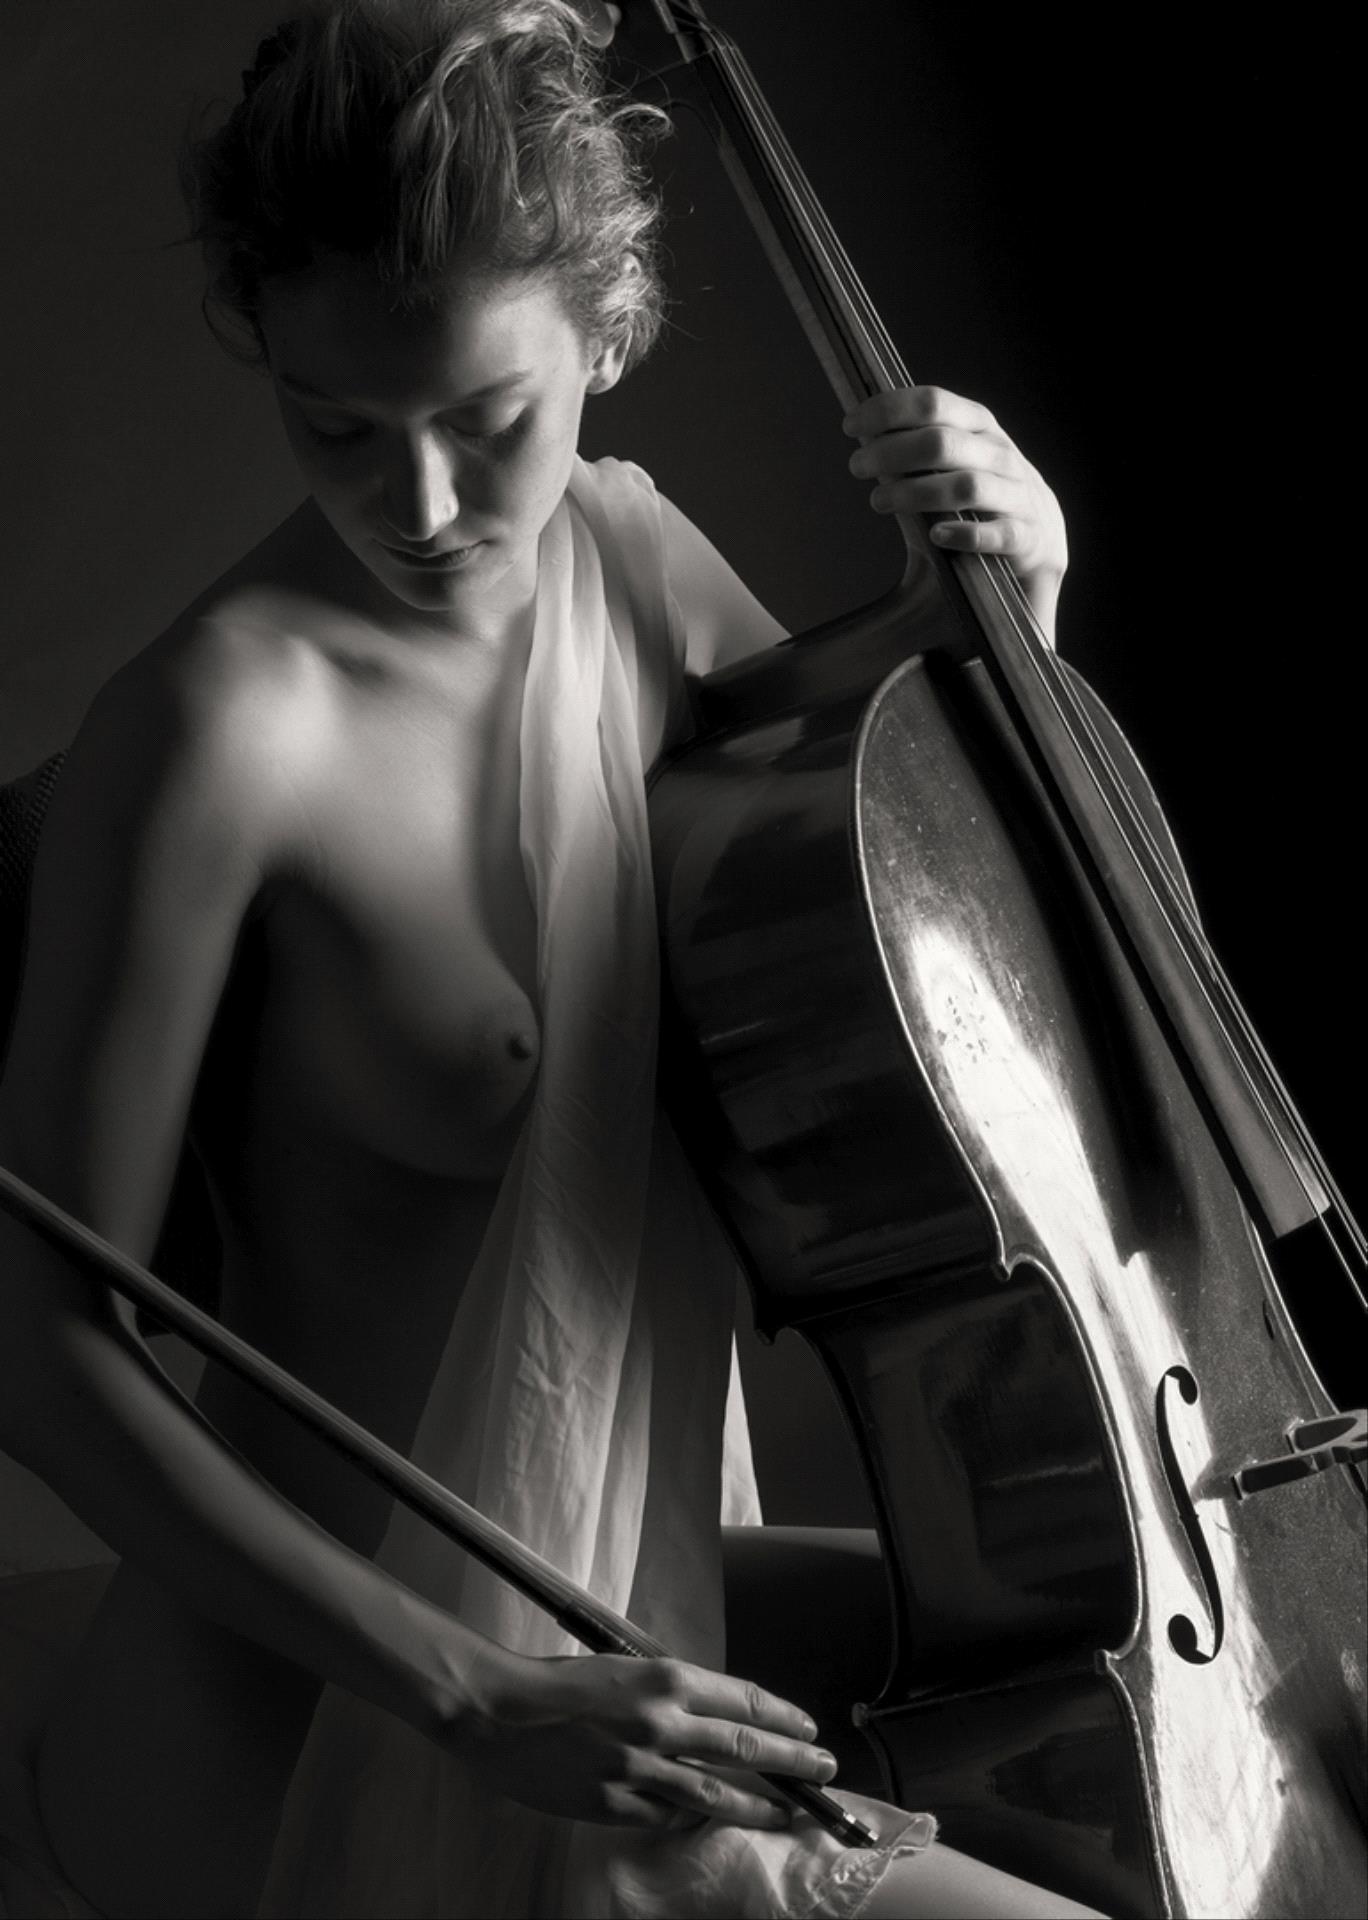 Golden Dragon Photo Award - James Yang (Canada) - Cellist